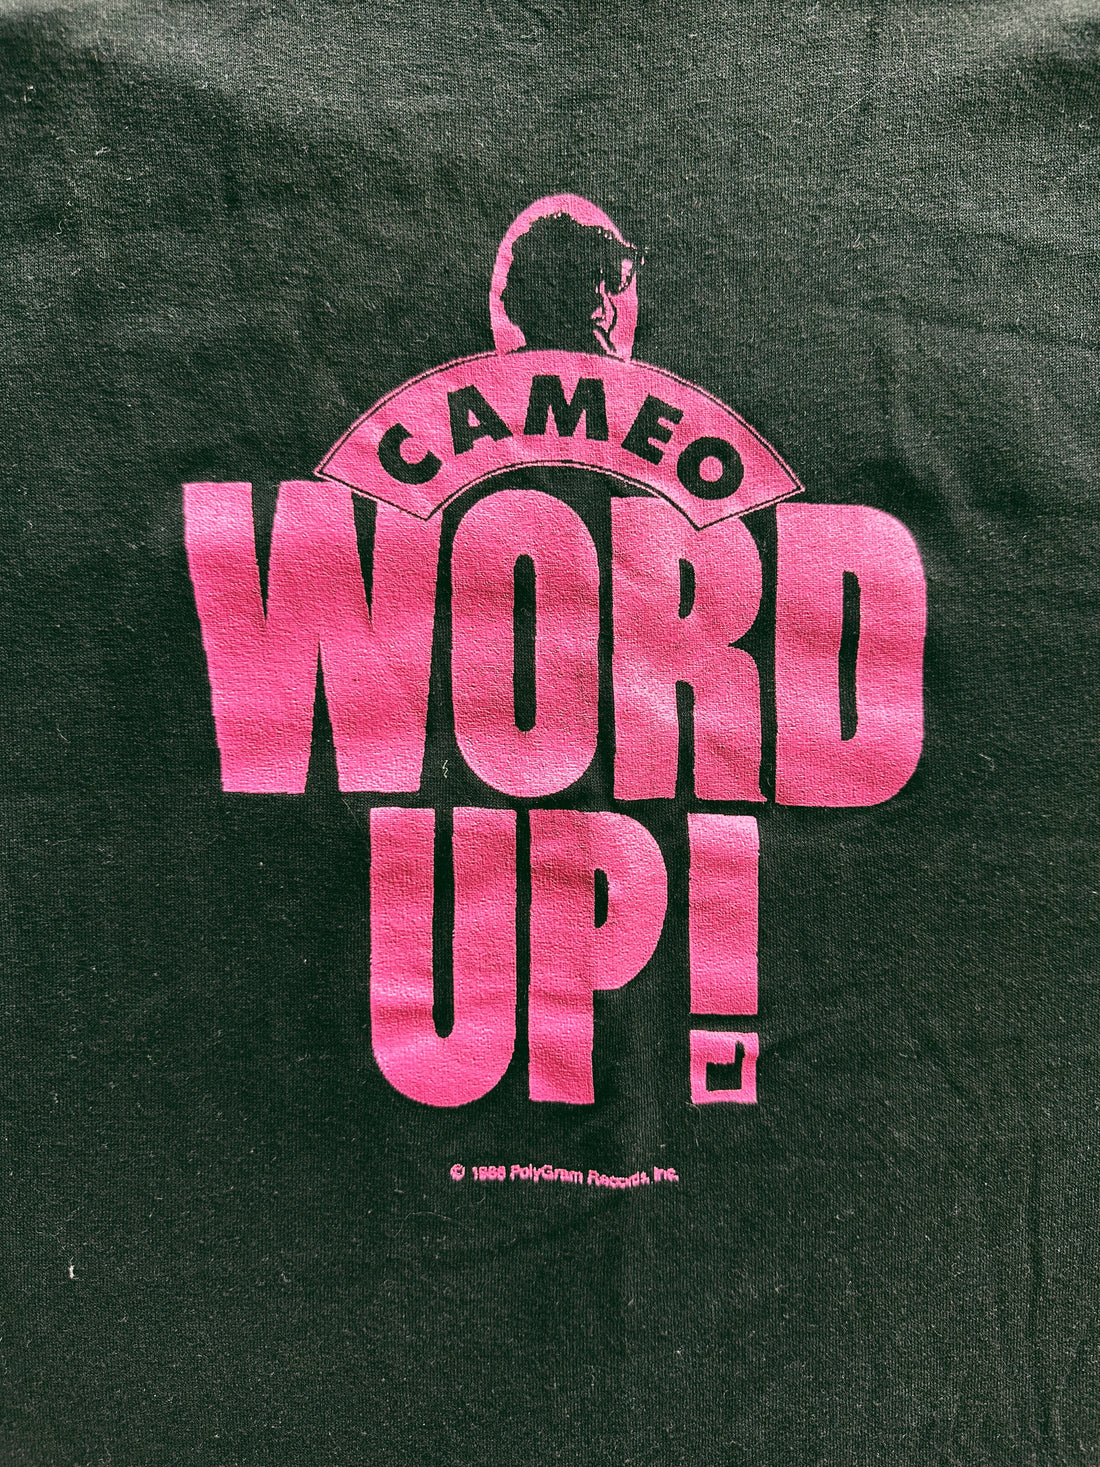 Vintage Cameo Concert Sleeveless T-shirt (1988)